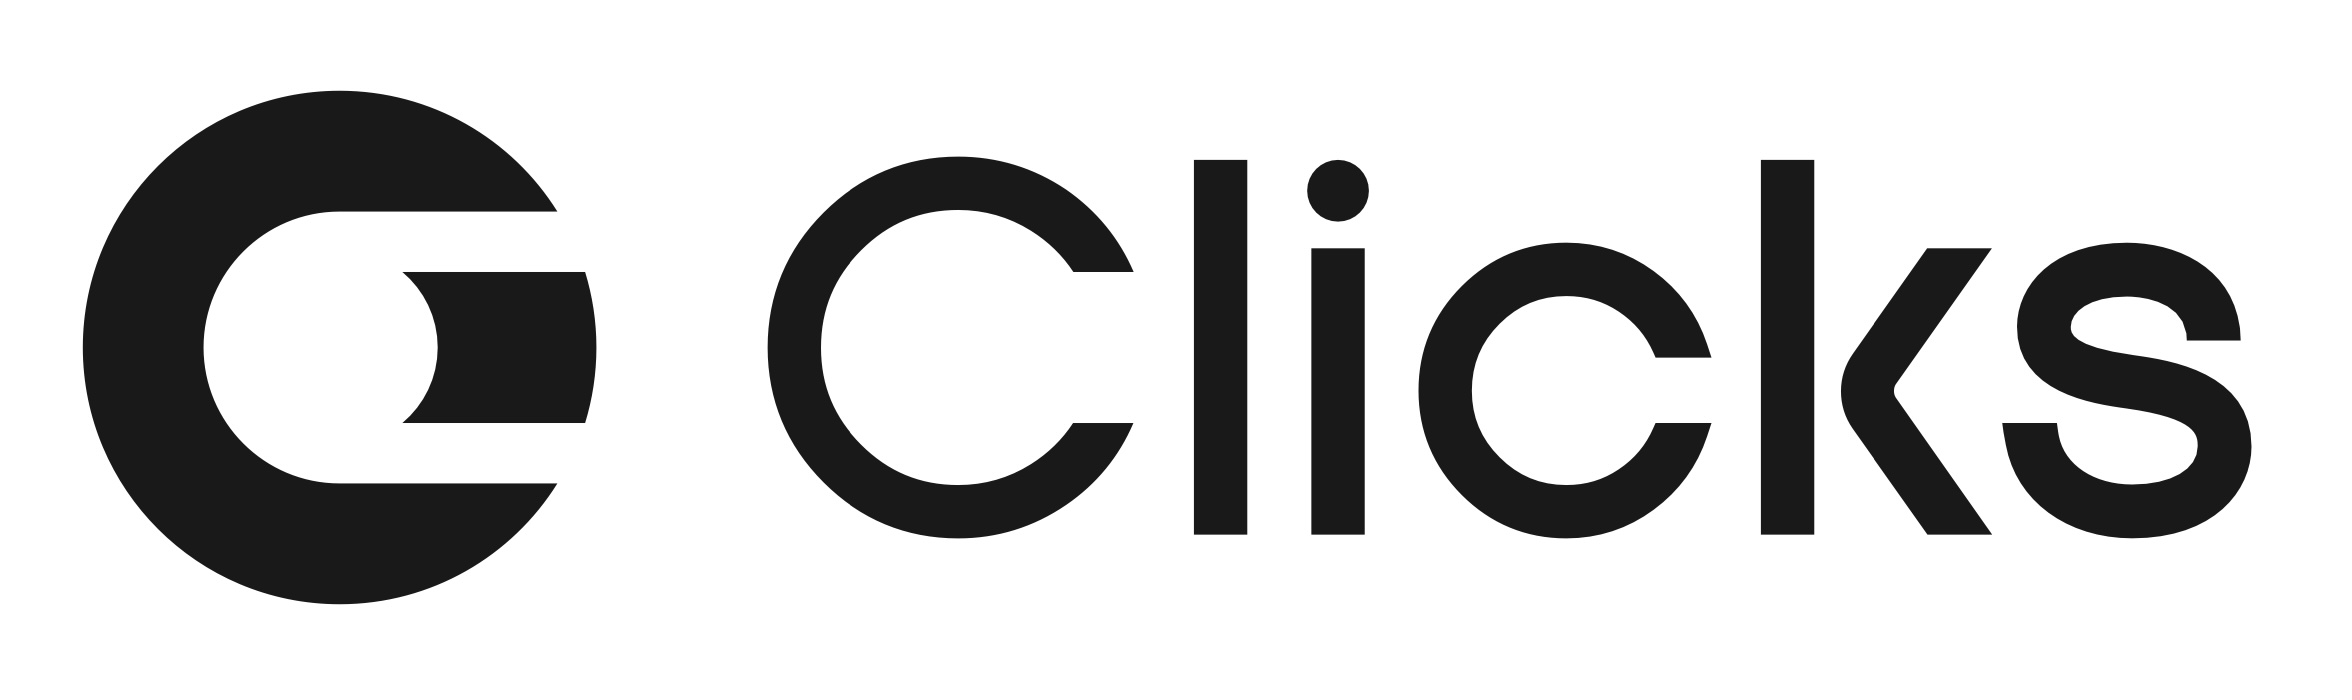 Clicks Brings a Real Keyboard to iPhone